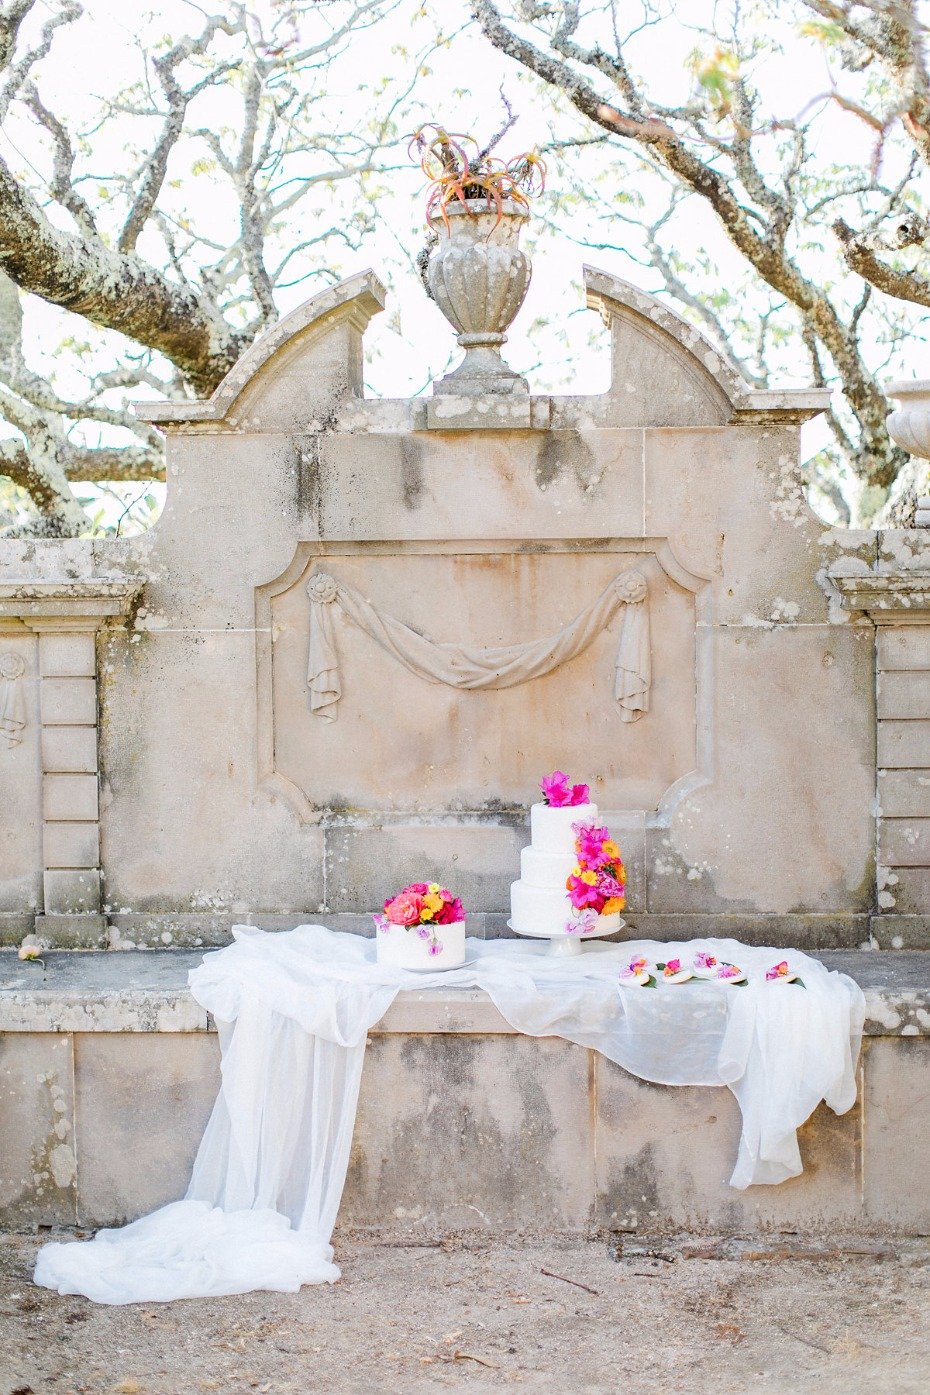 romantic outdoor wedding cake display